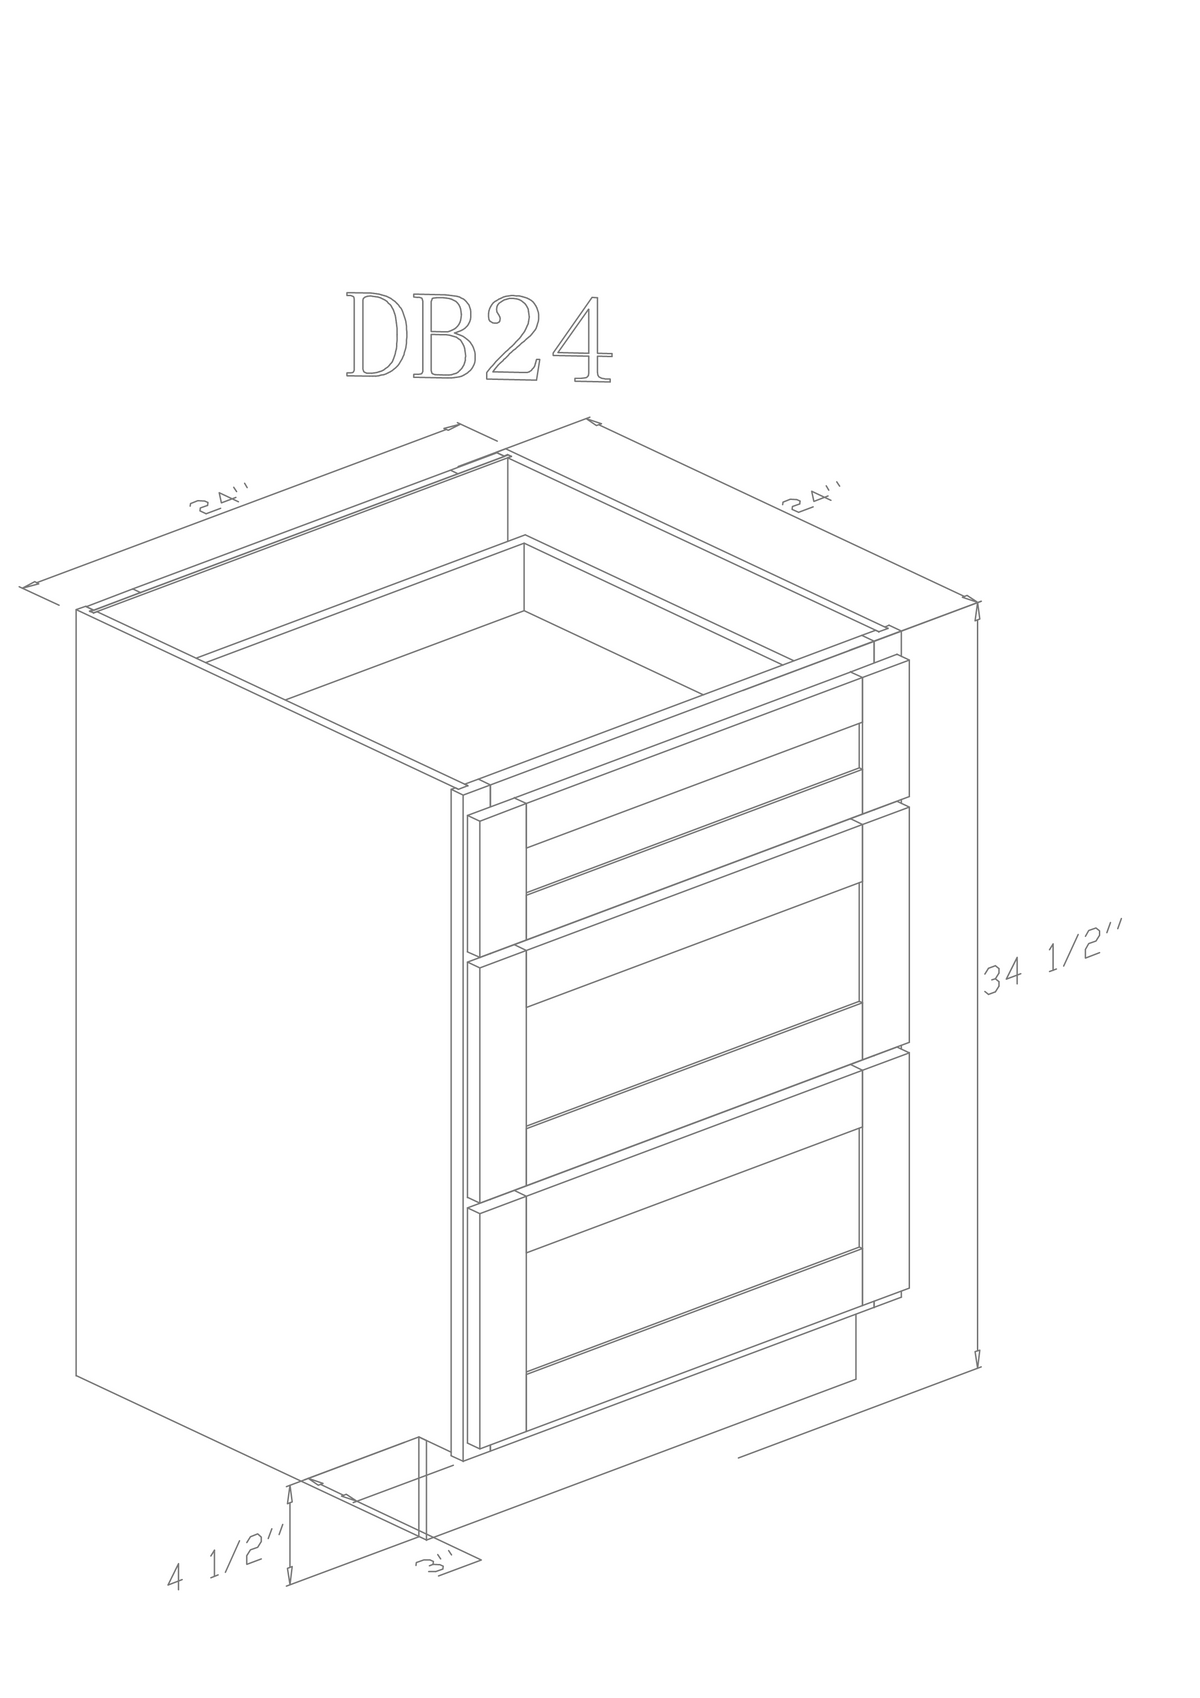 Base 24" - Blue Shaker 24 Inches 3 Drawer Base Cabinet